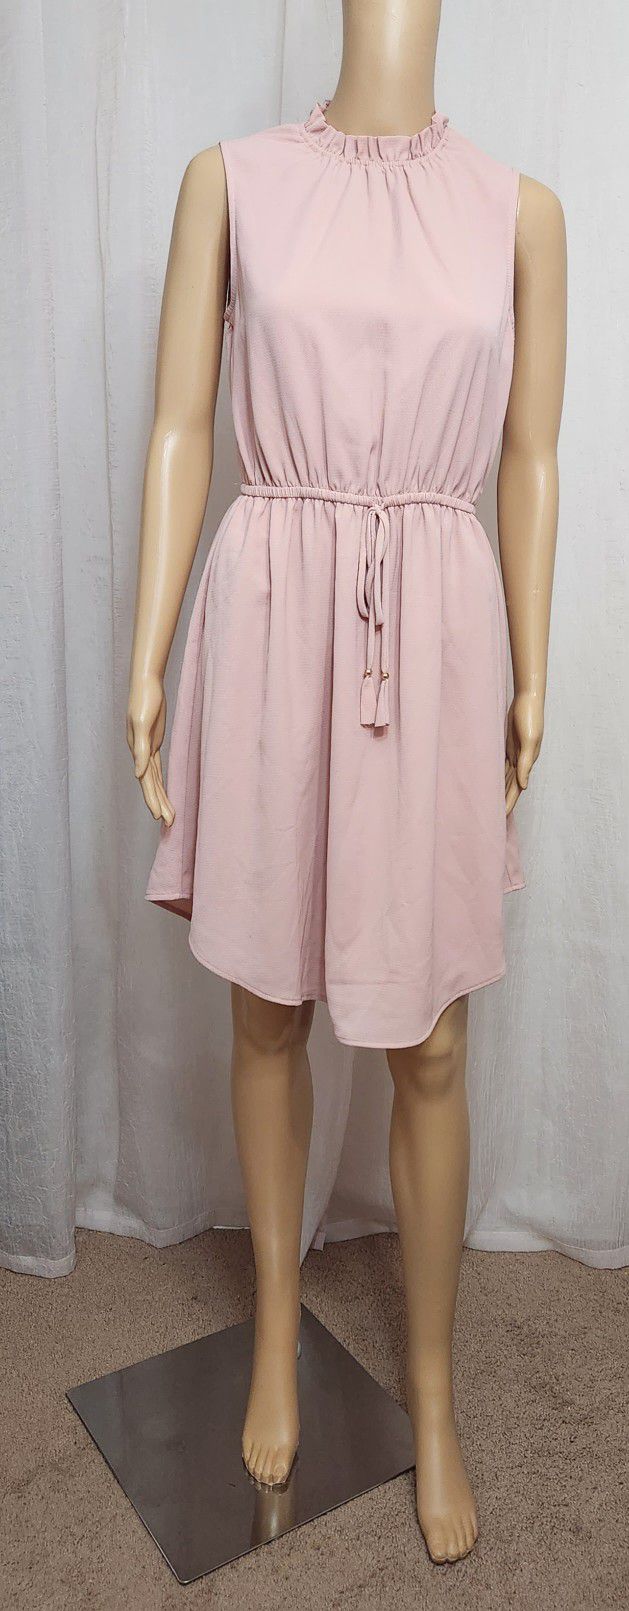 Blush Dress - Size 4